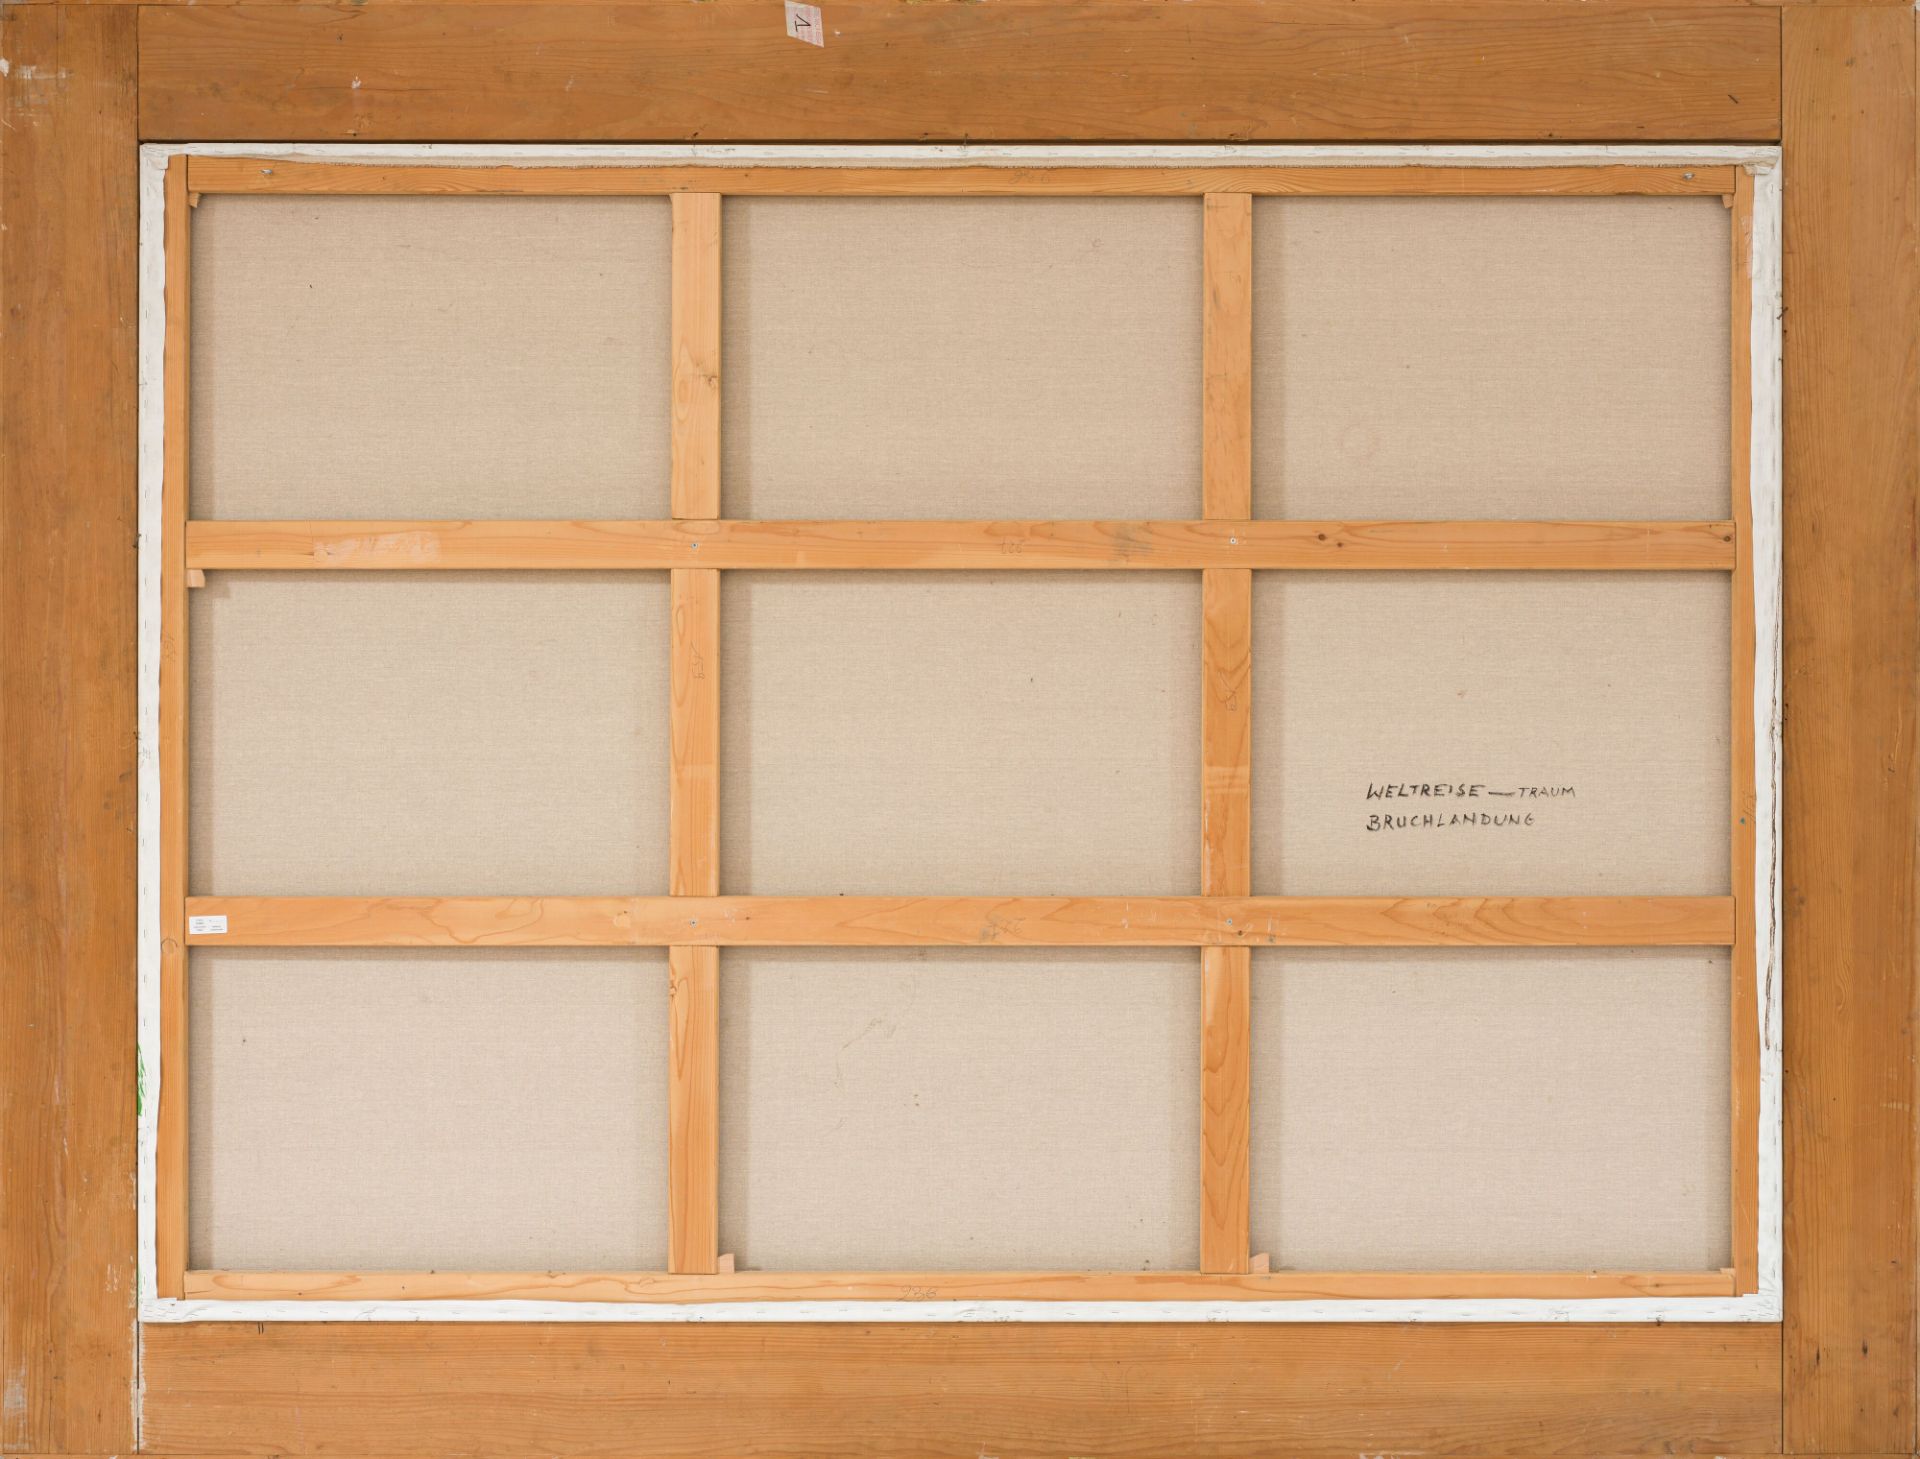 Ernst Fuchs"Weltreise - Traum - Bruchlandung"early 2000smixed media on canvas; framed168 x 236 - Image 3 of 3